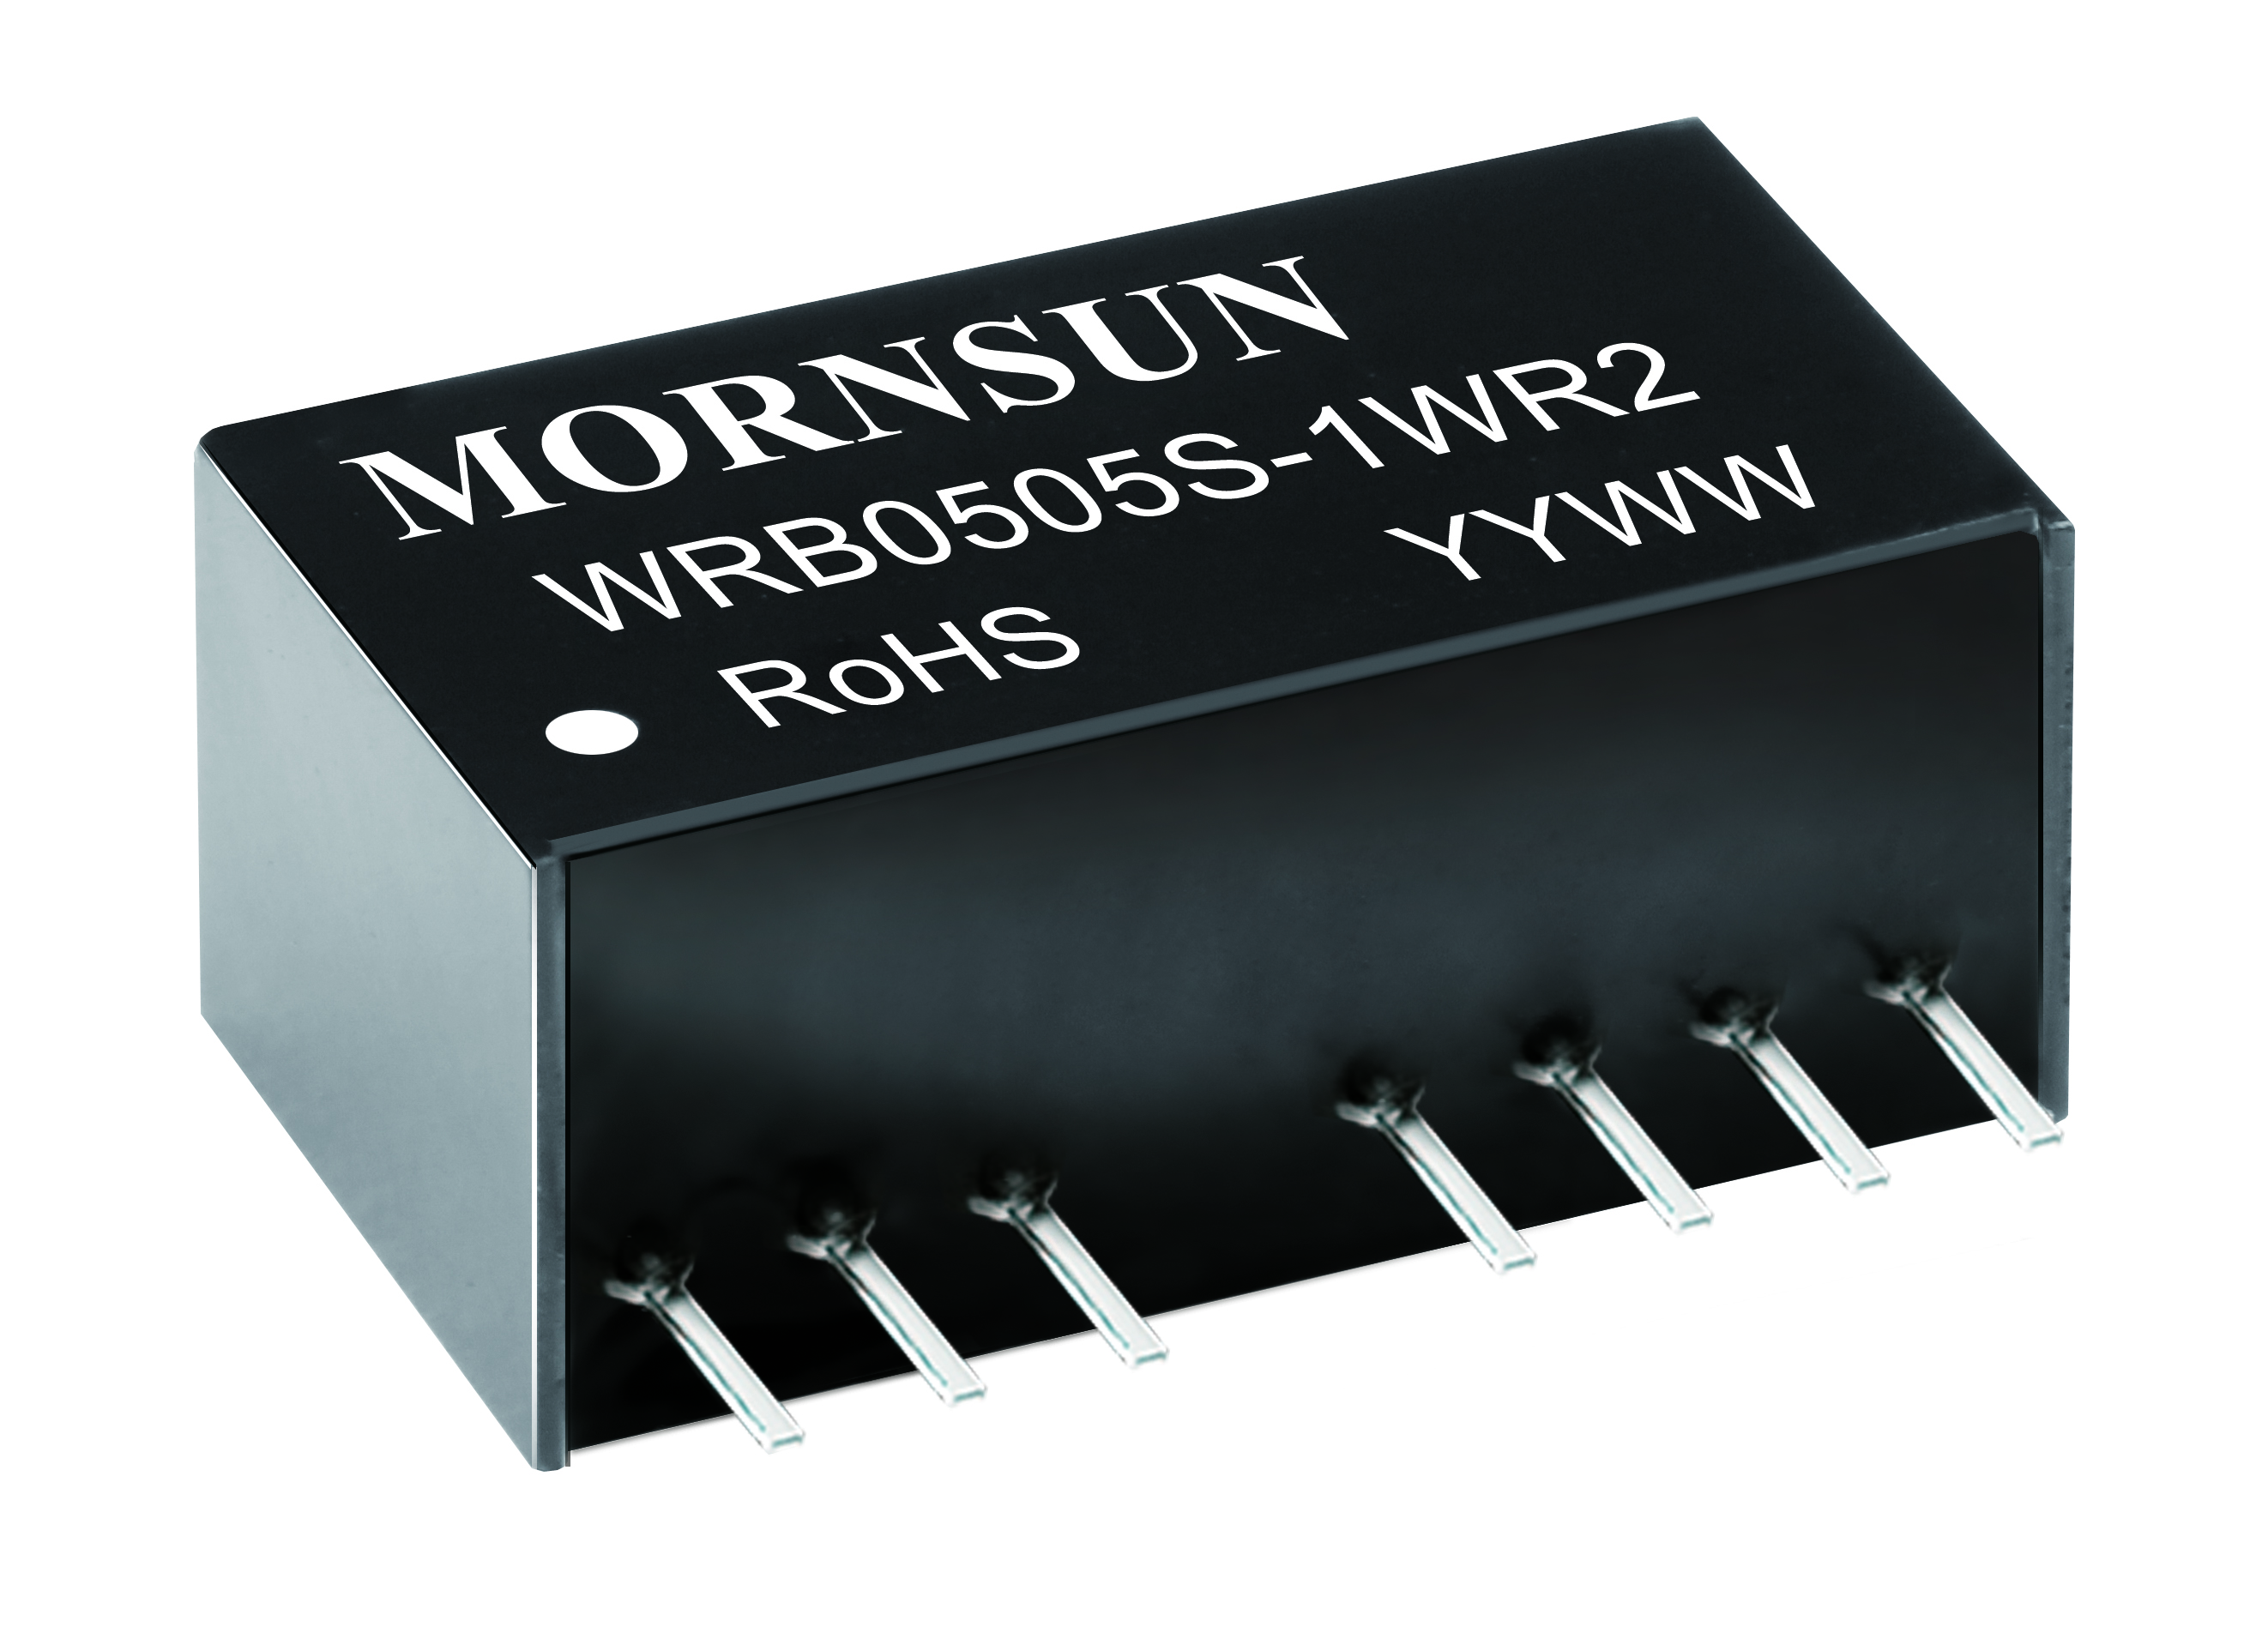 WRB1505S-1WR2 | MORNSUN